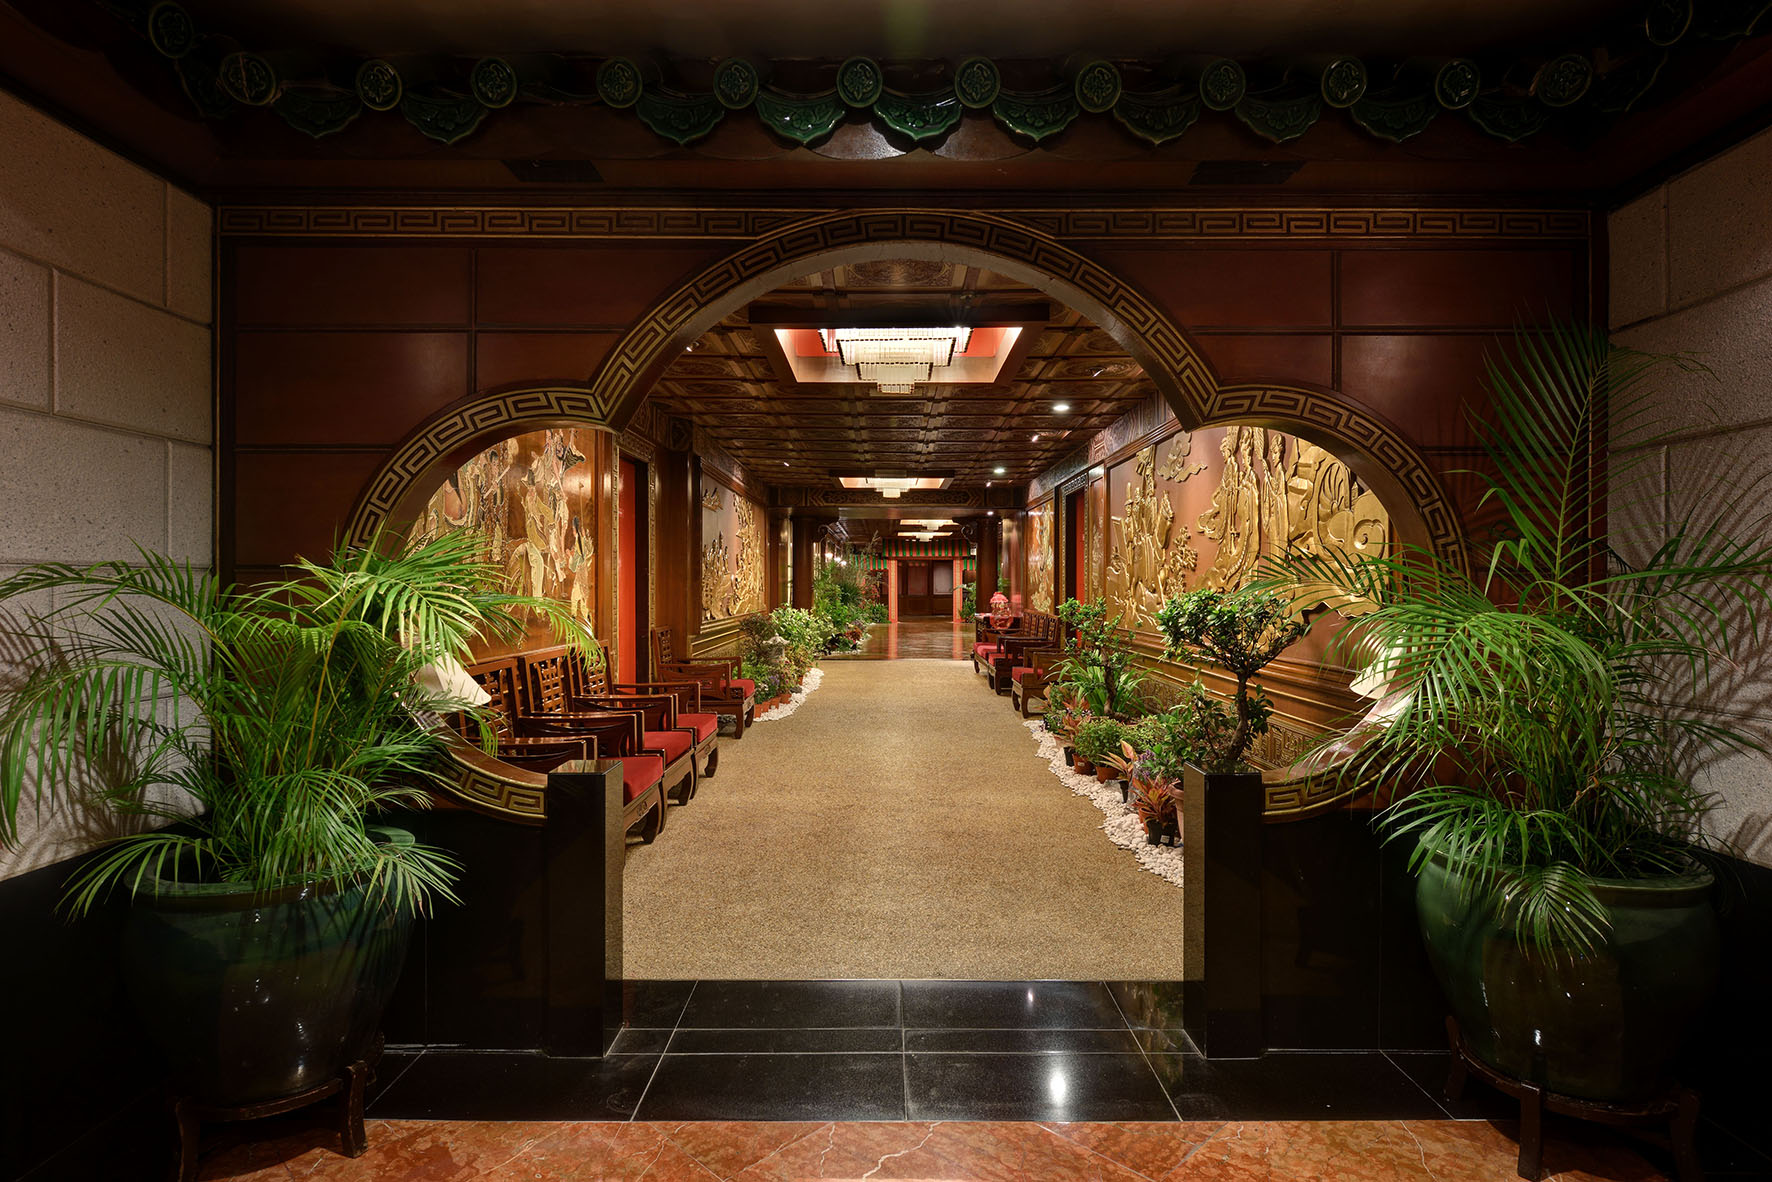 mandarin palace casino complaints